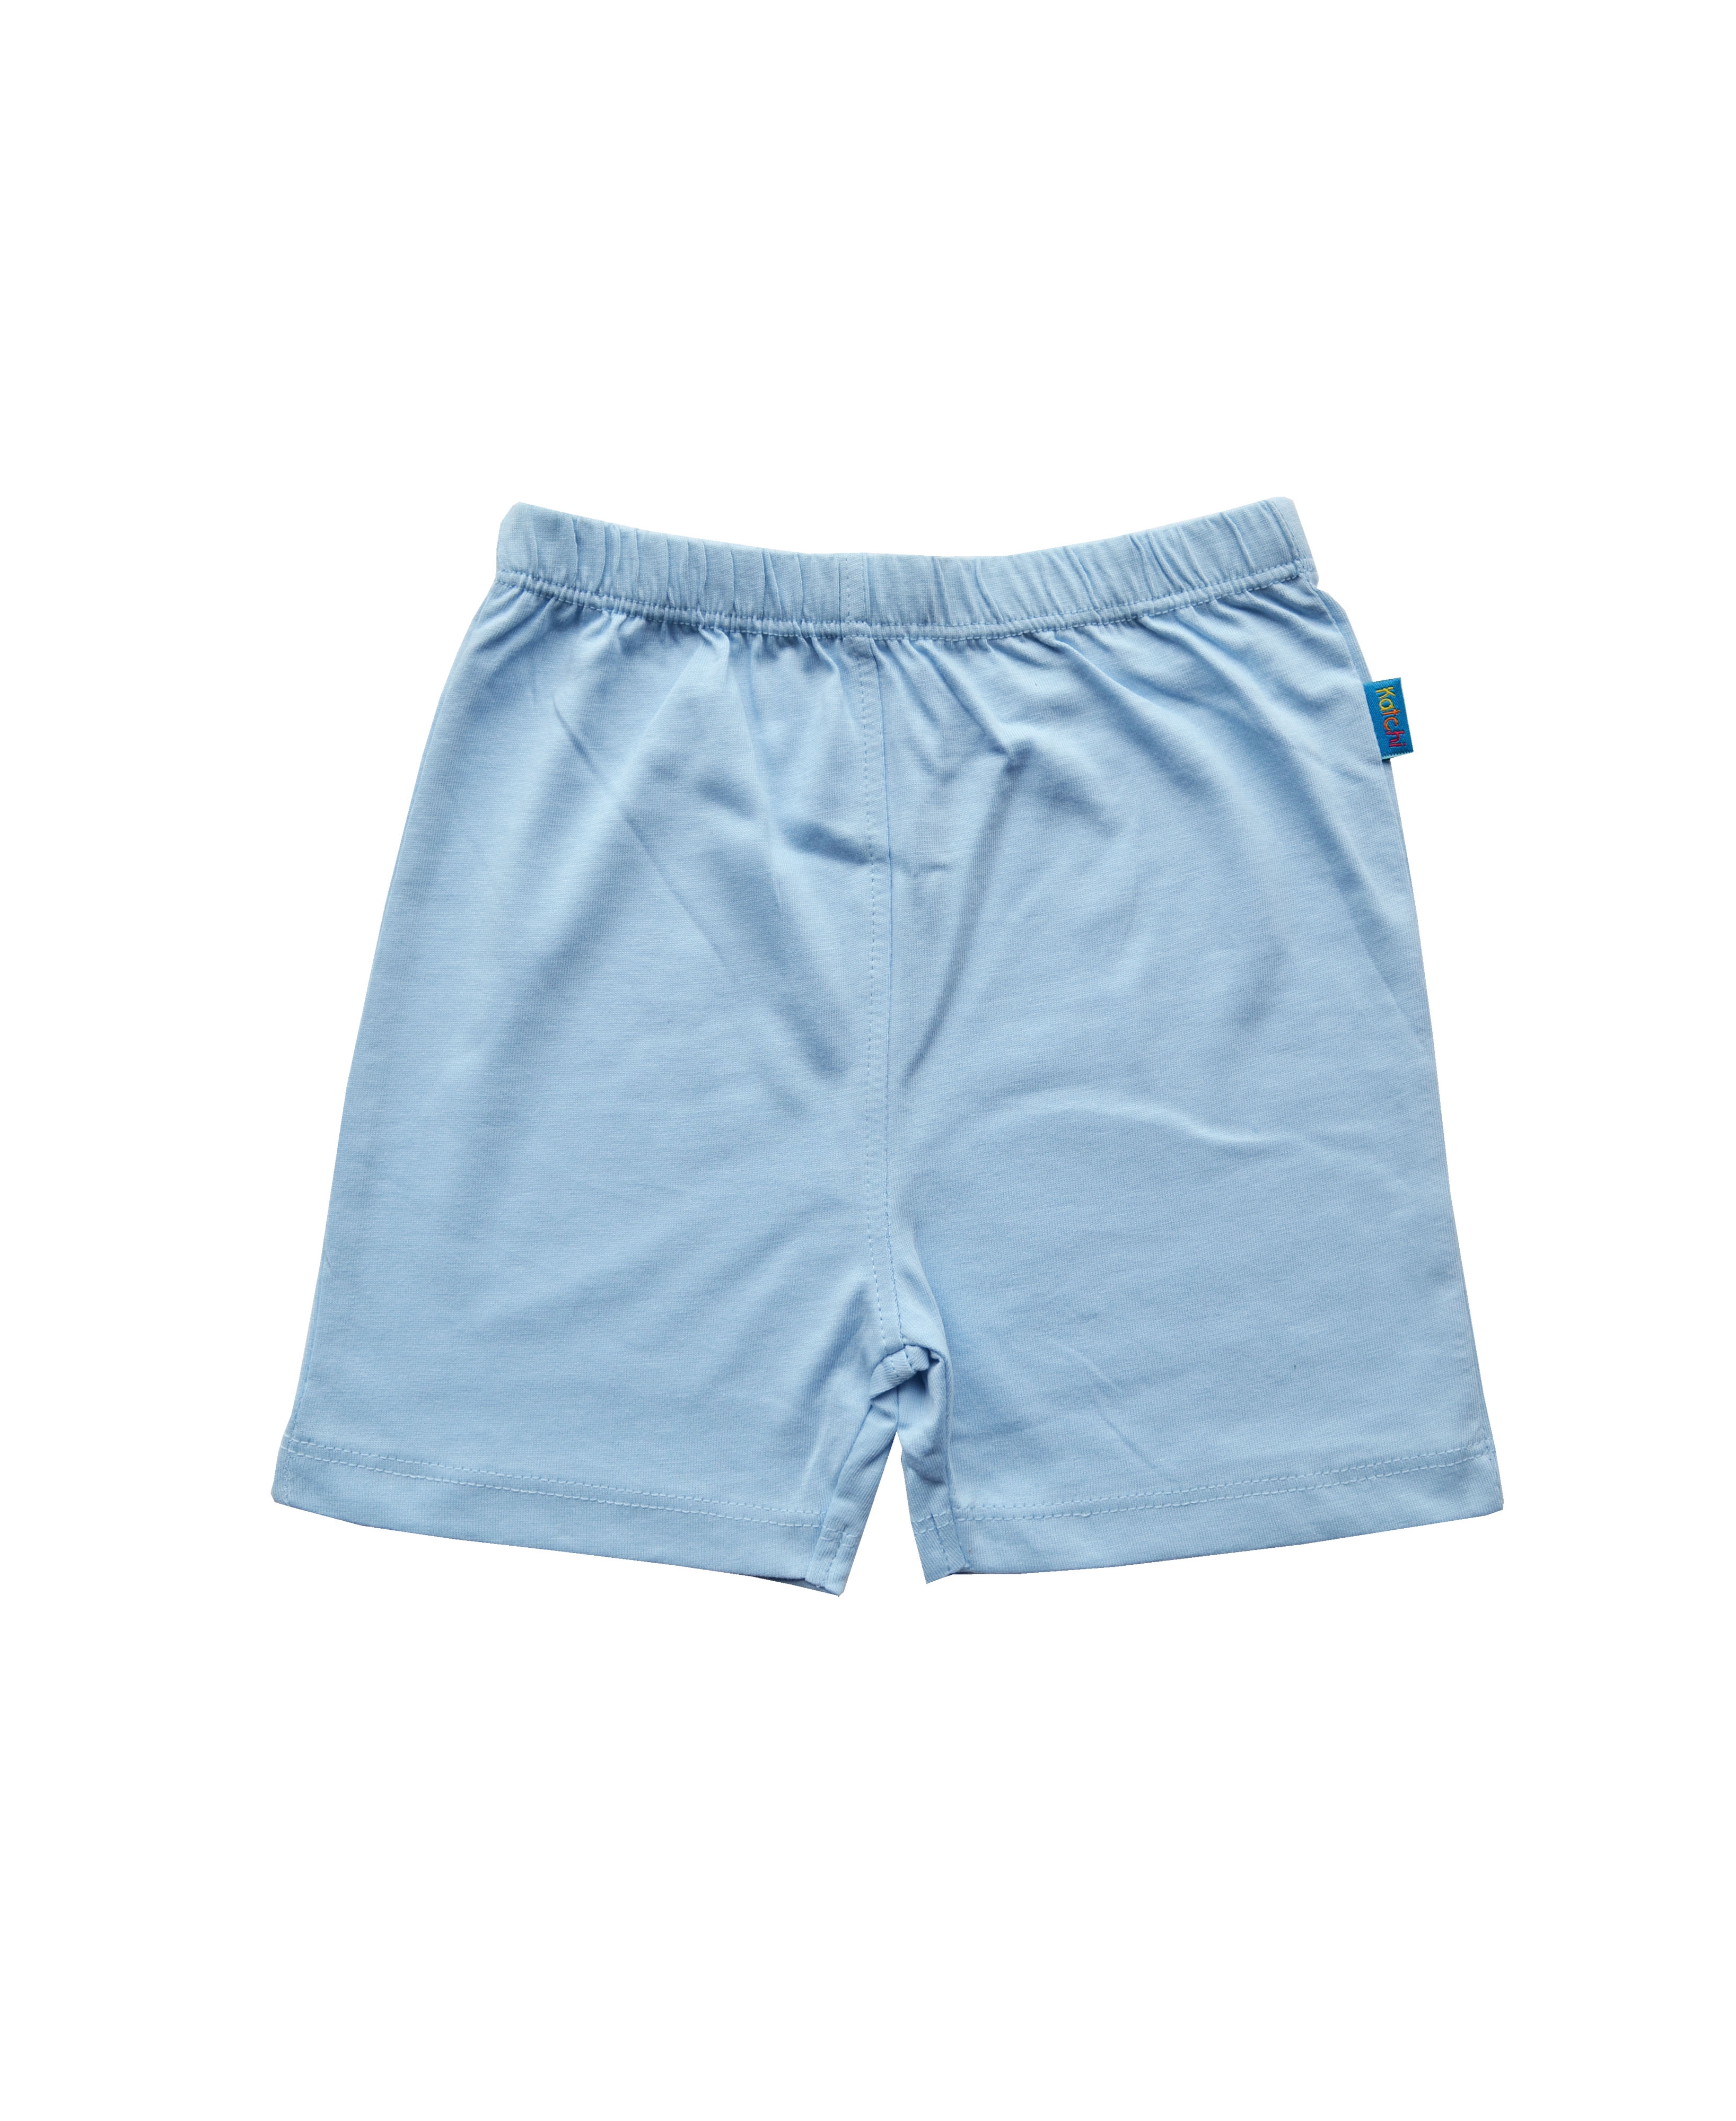 Babeez | Blue Boys Shorts (100% Cotton Single Jersey) undefined